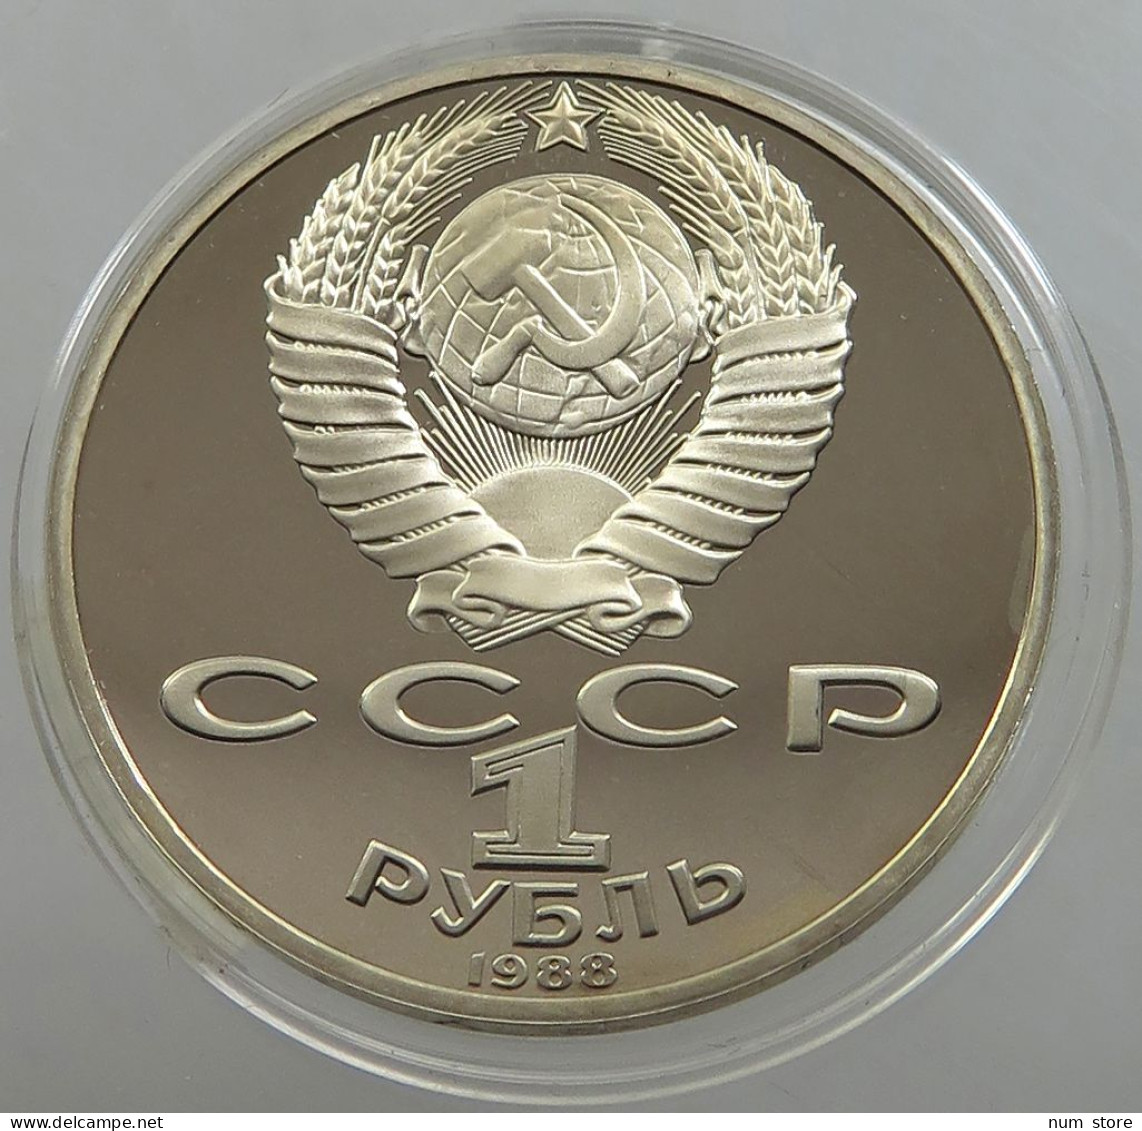 RUSSIA USSR 1 ROUBLE 1988 TOLSTOI #sm14 0525 - Russia